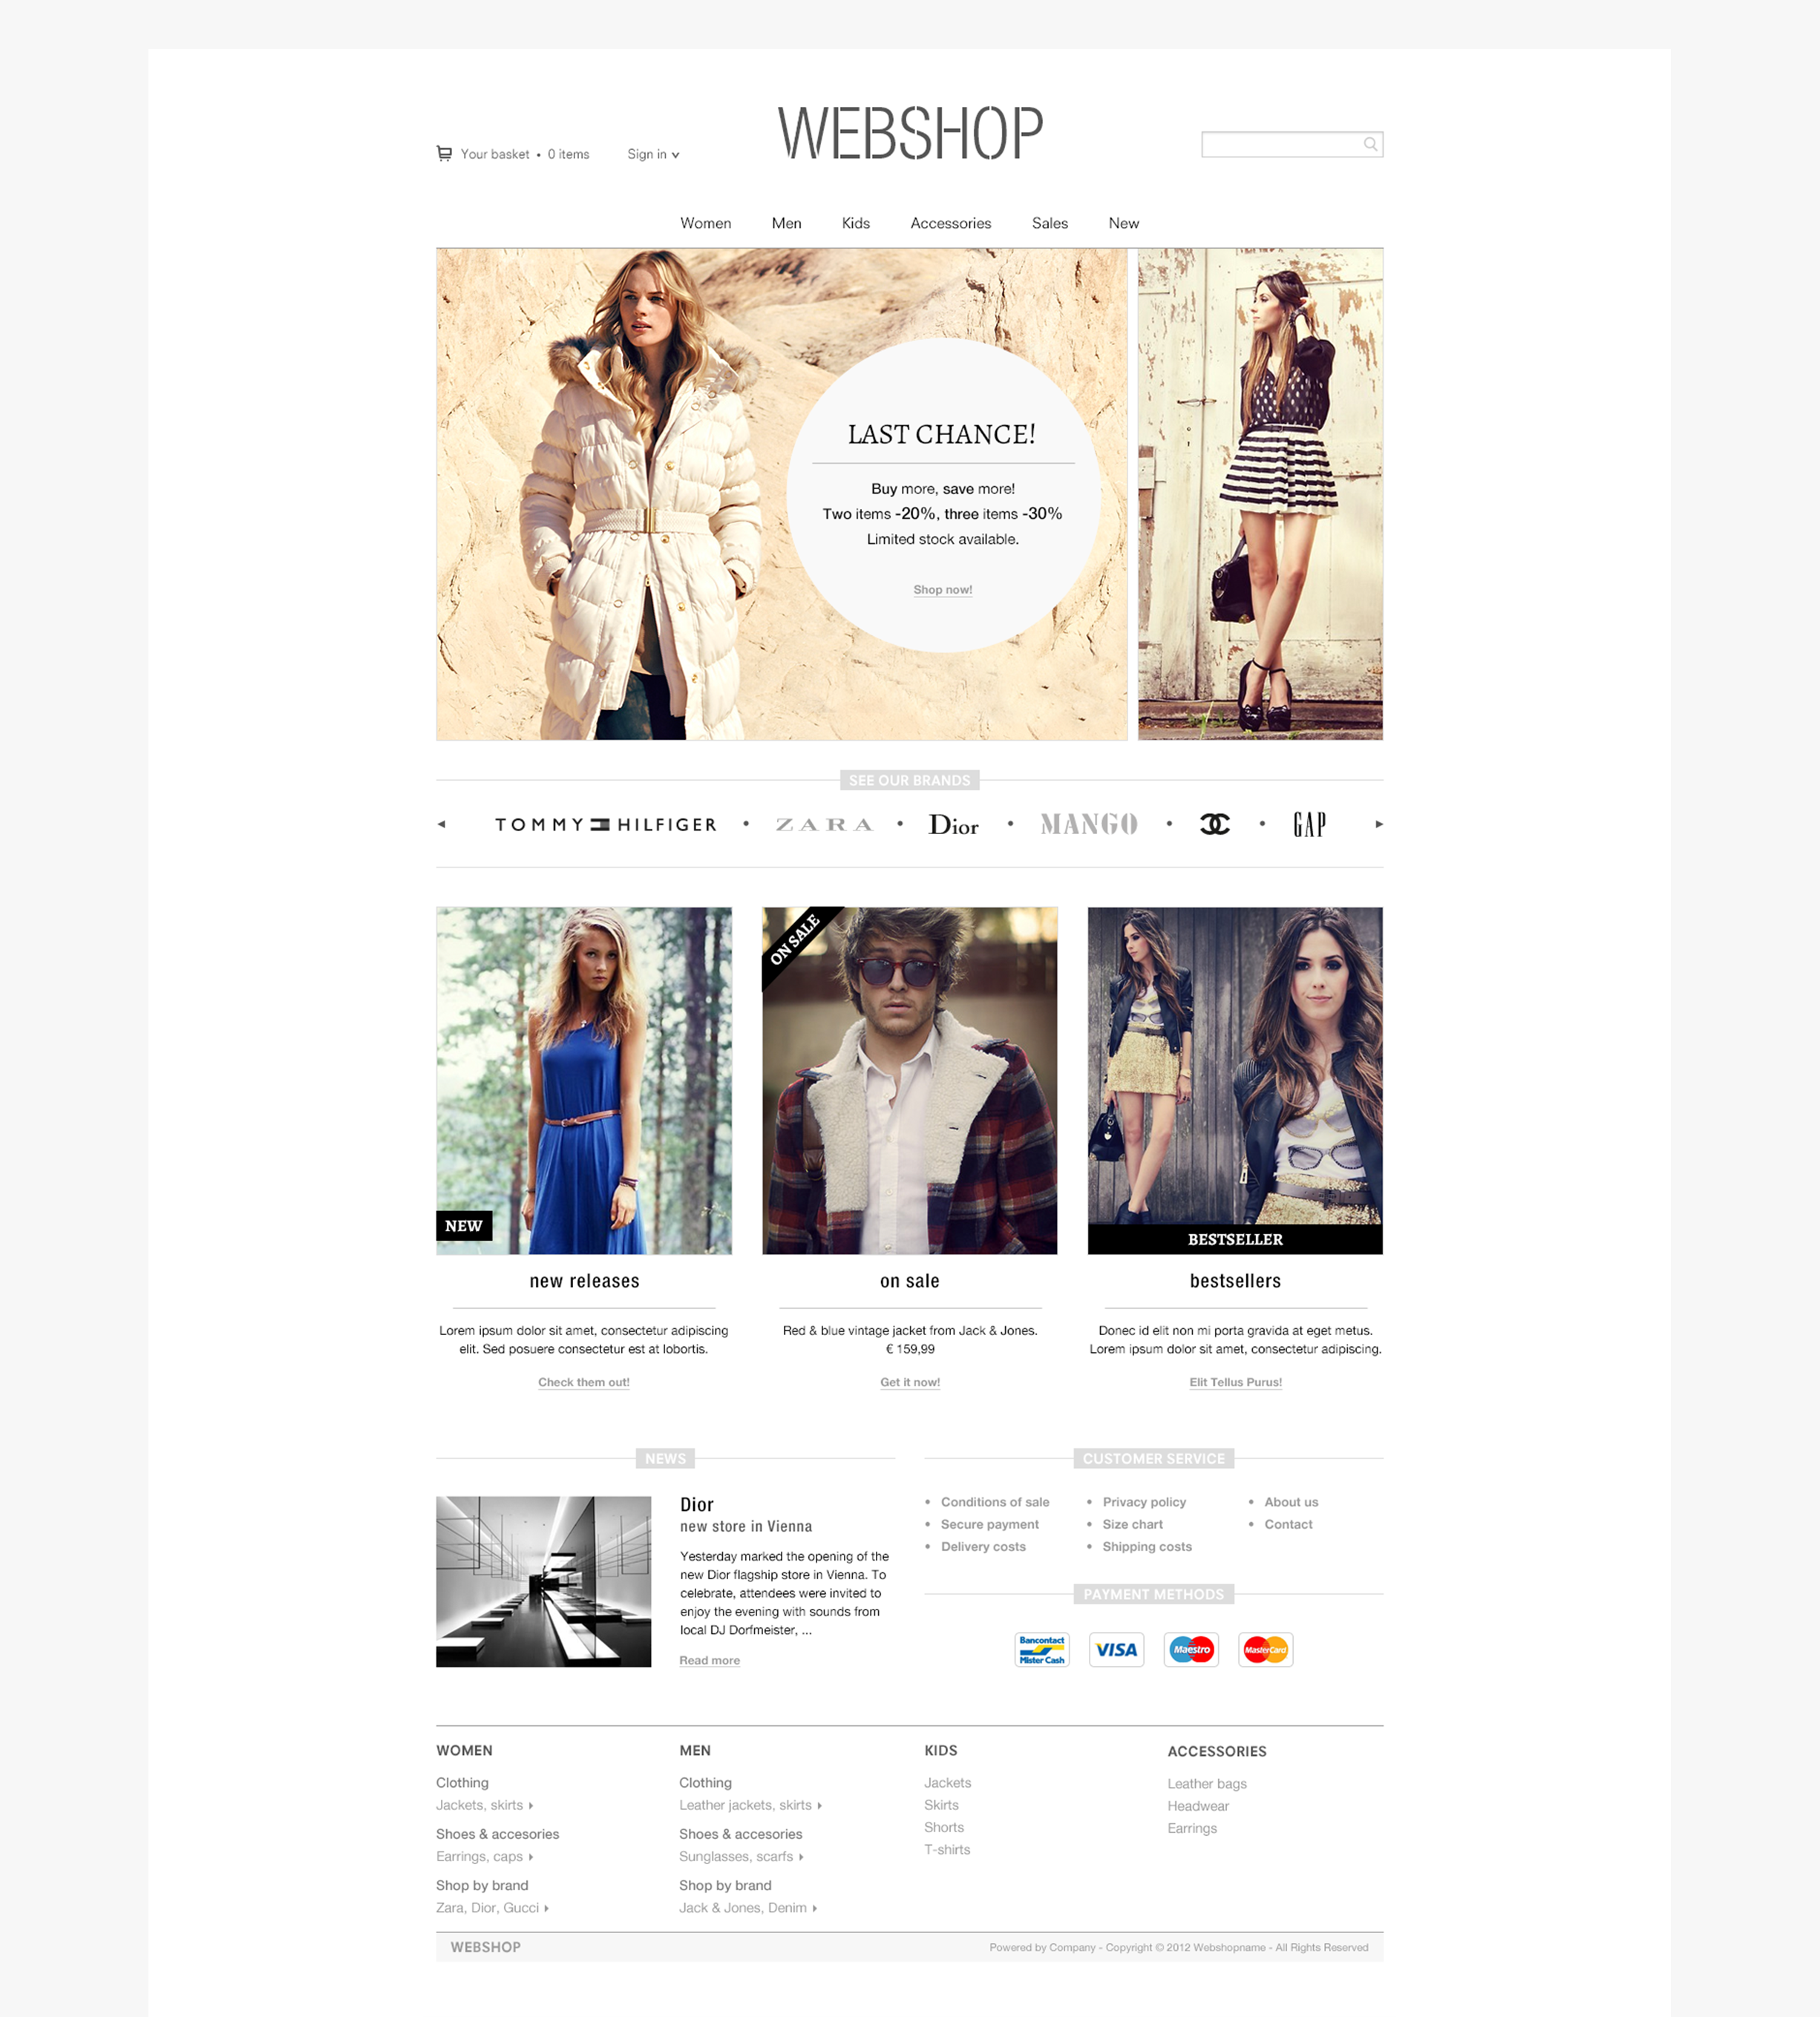 Webshop layout - homepage